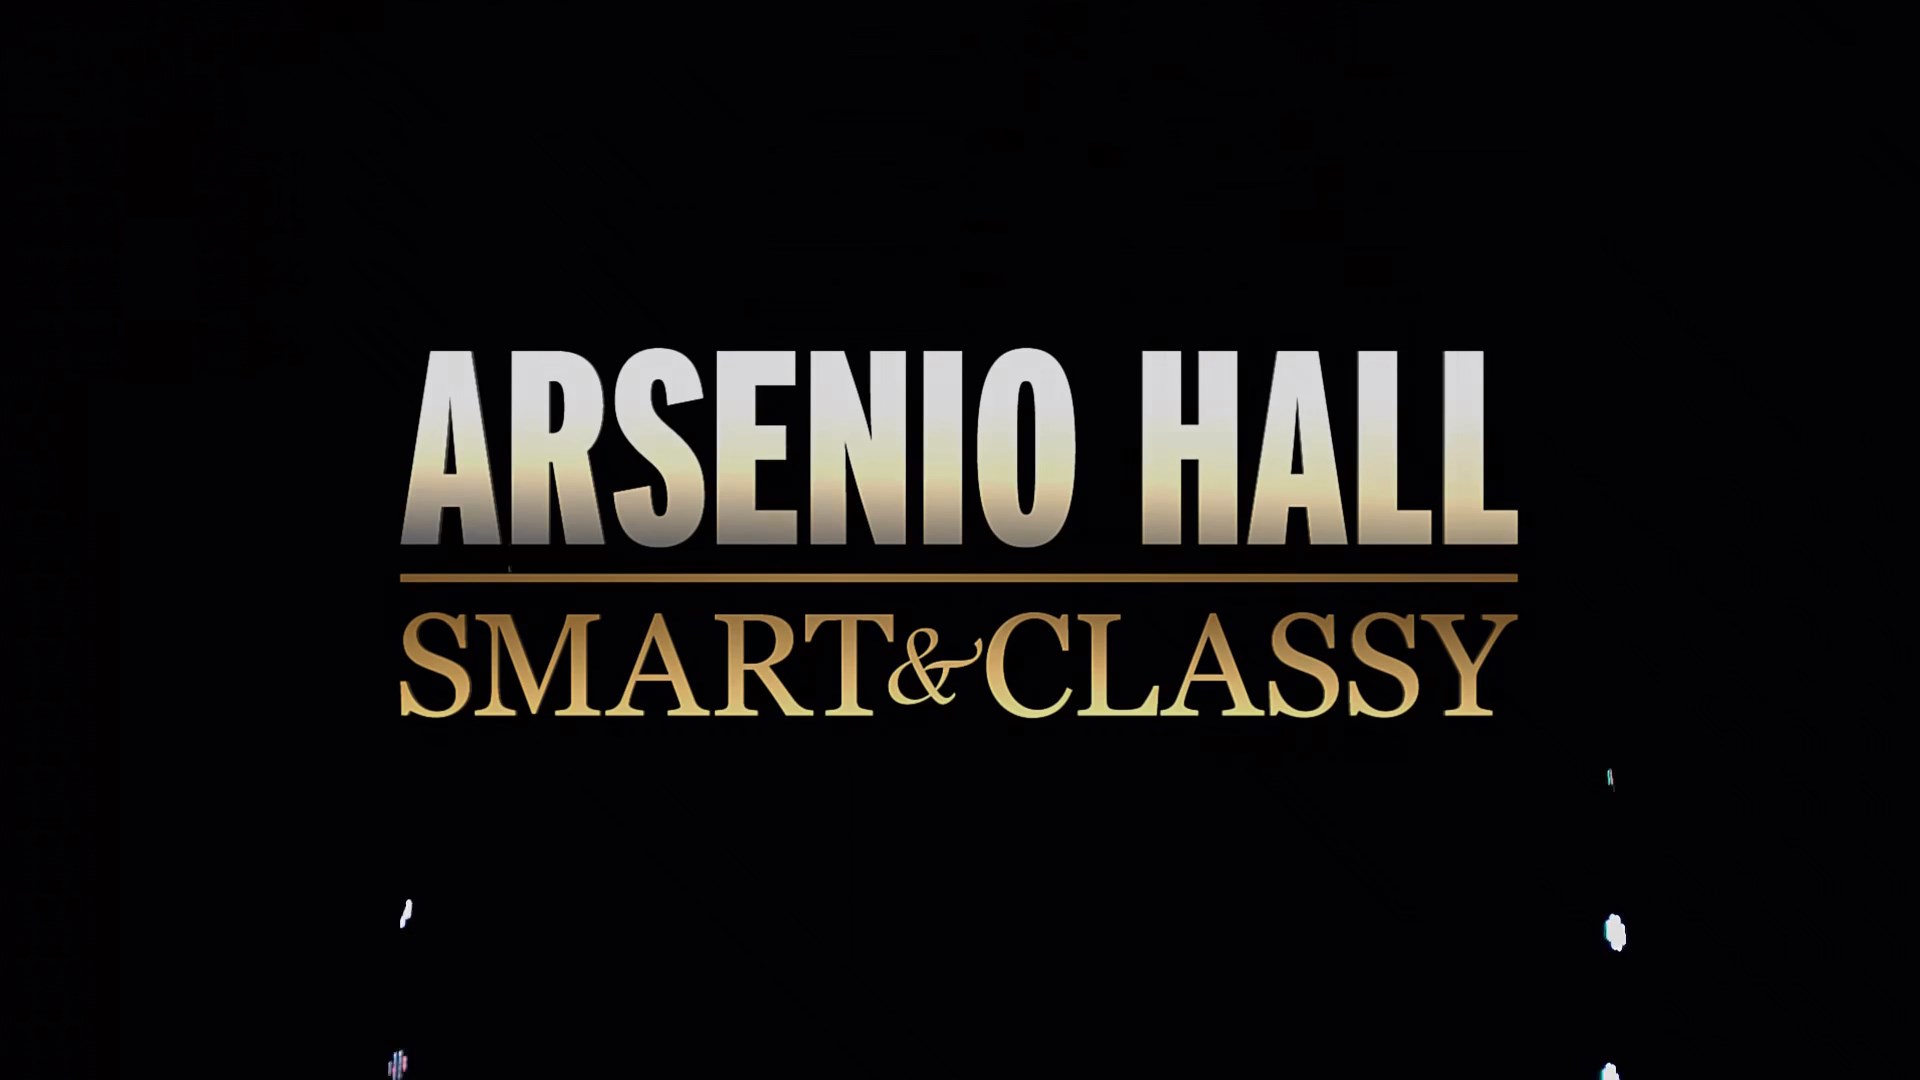 Arsenio Hall: Smart & Classy,Arsenio Hall: Smart & Classy 2019,Arsenio Hall: Smart & Classy مترجم,Arsenio Hall,أرسينيو هول: خفة وأناقة,أرسينيو هول,ستاند اب,ستاند اب كوميدي